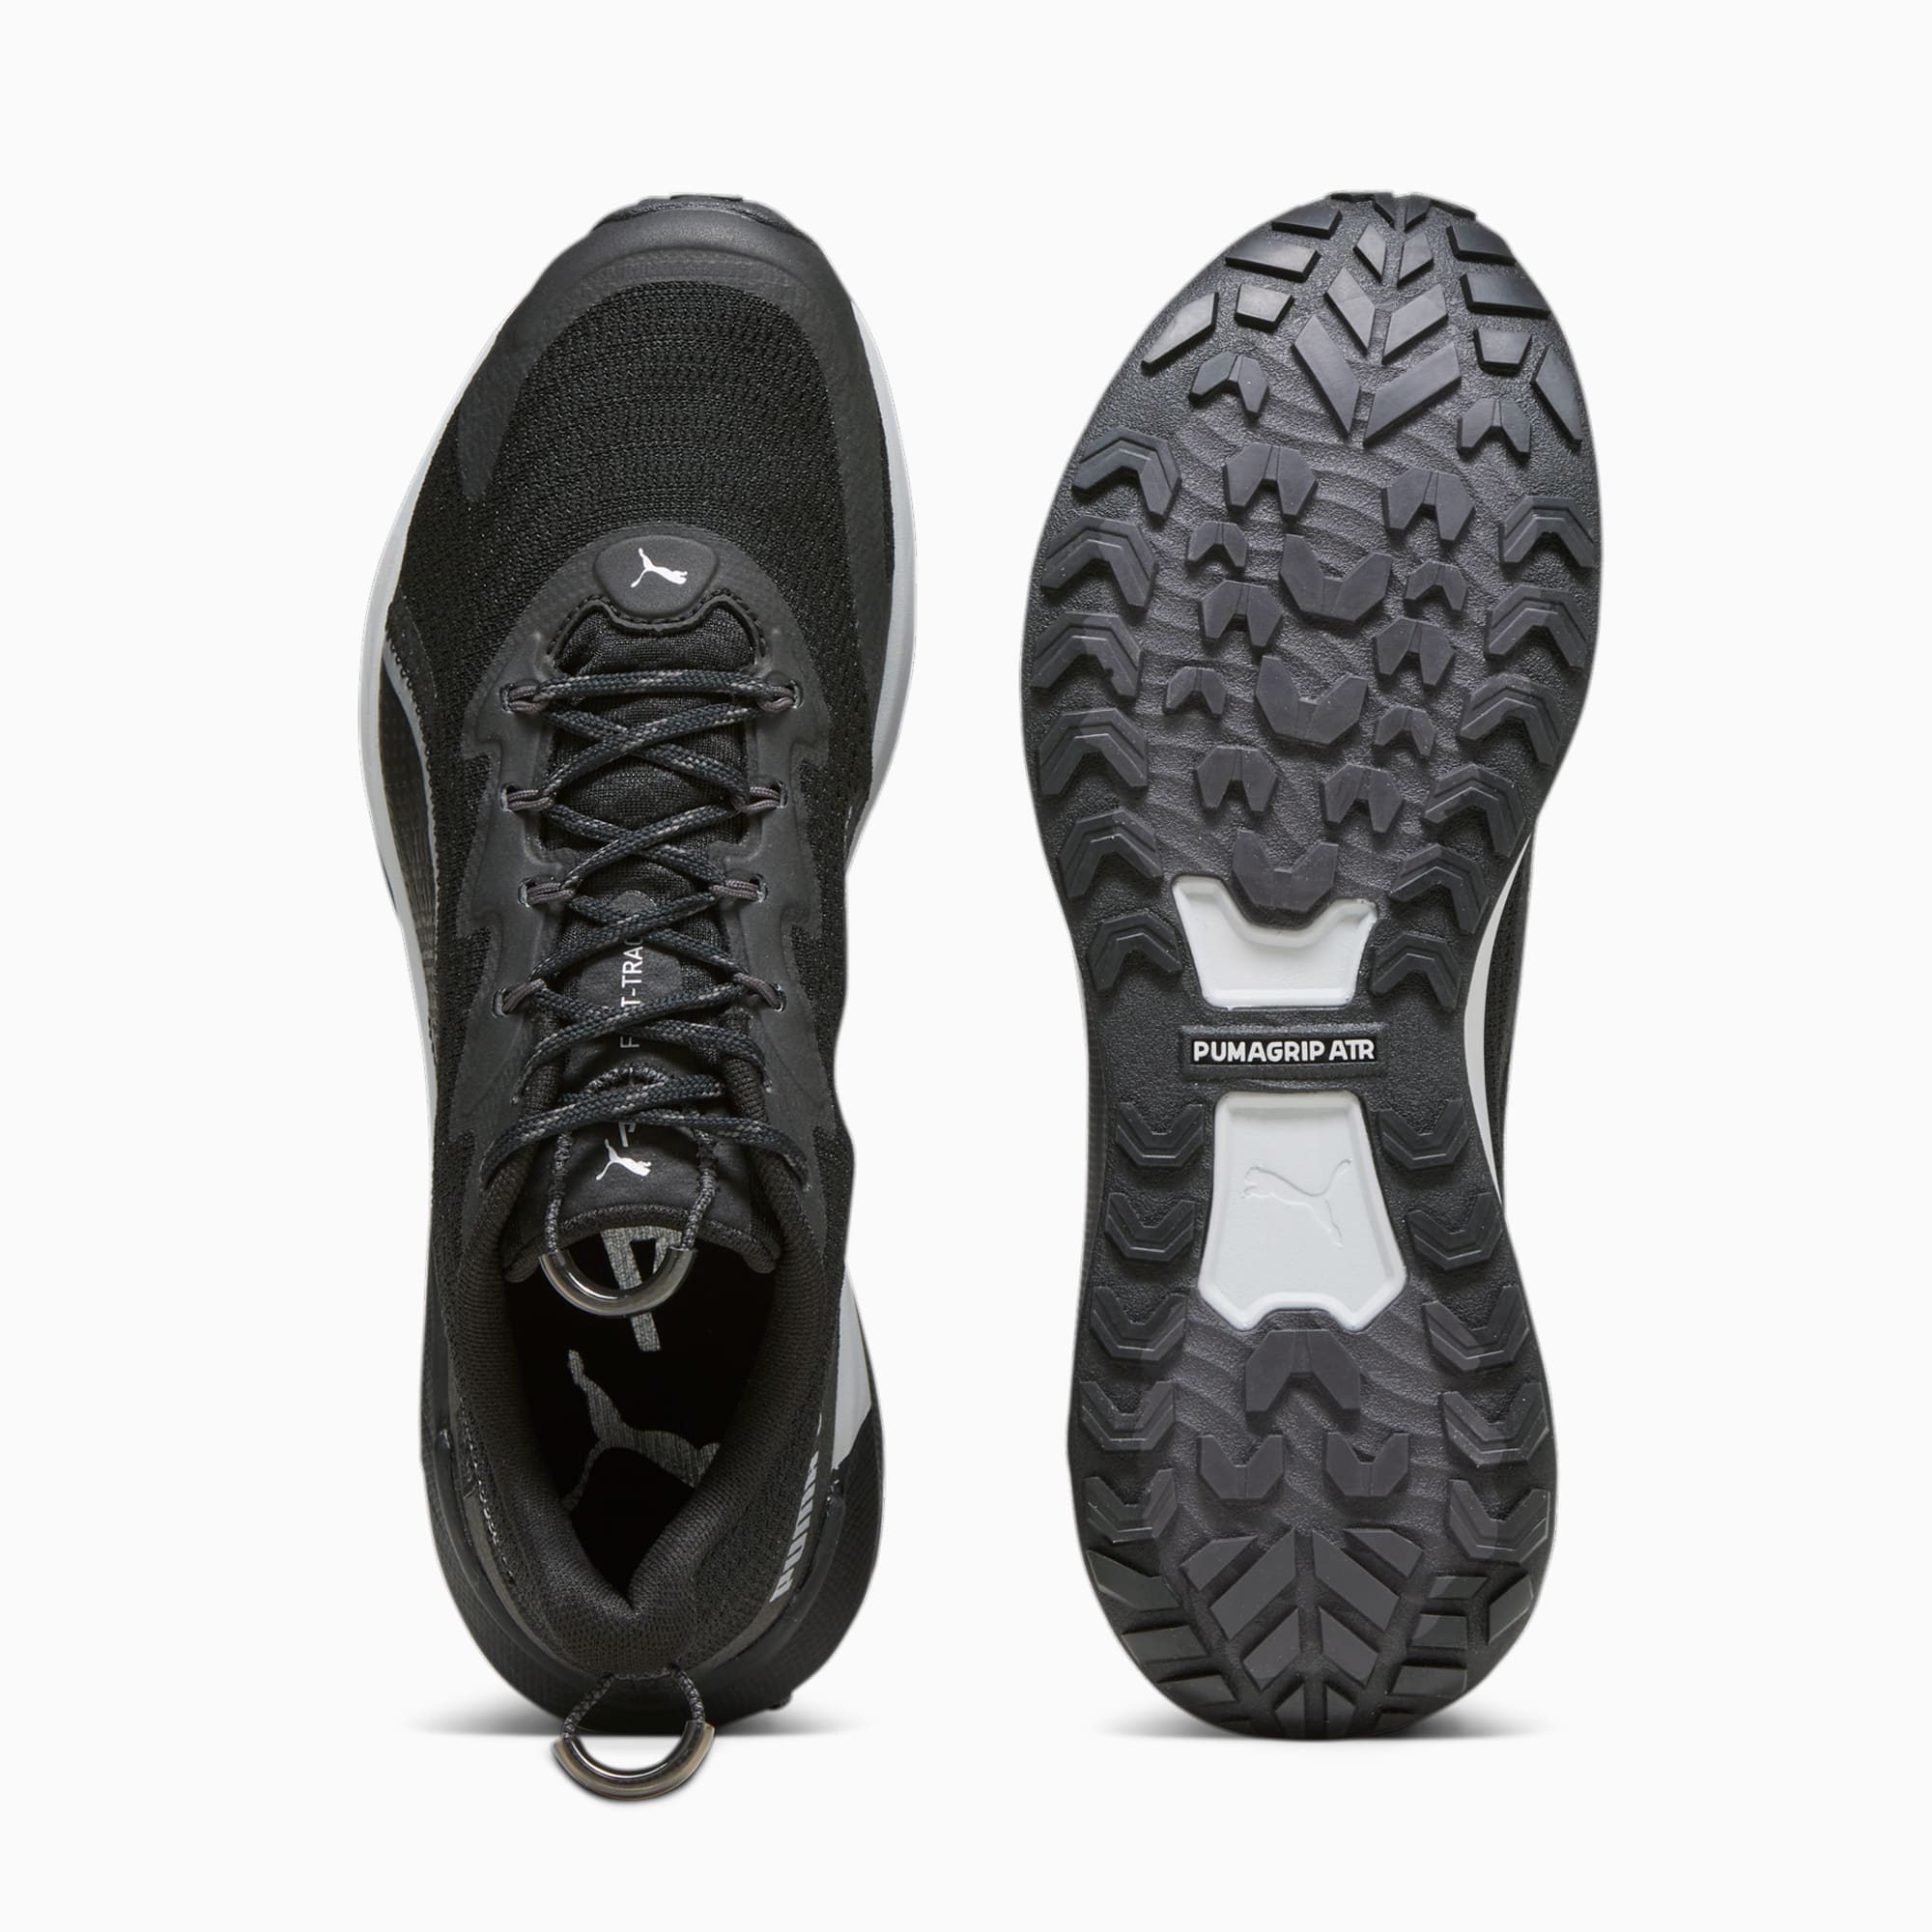 Zapatillas de trail running Fast-Trac NITRO para hombre, black